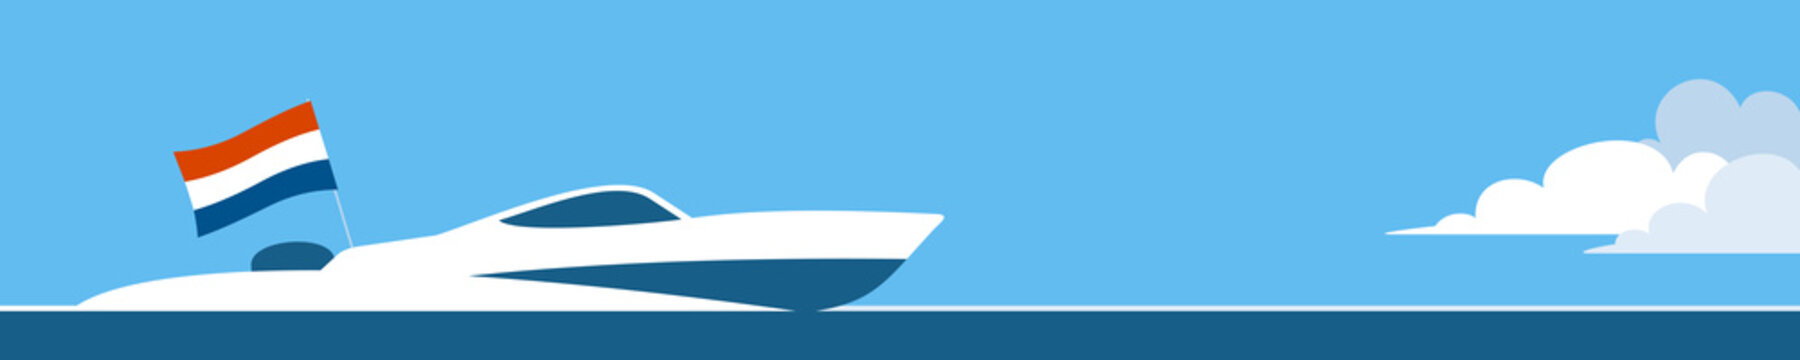 Motor boat with netherlands flag